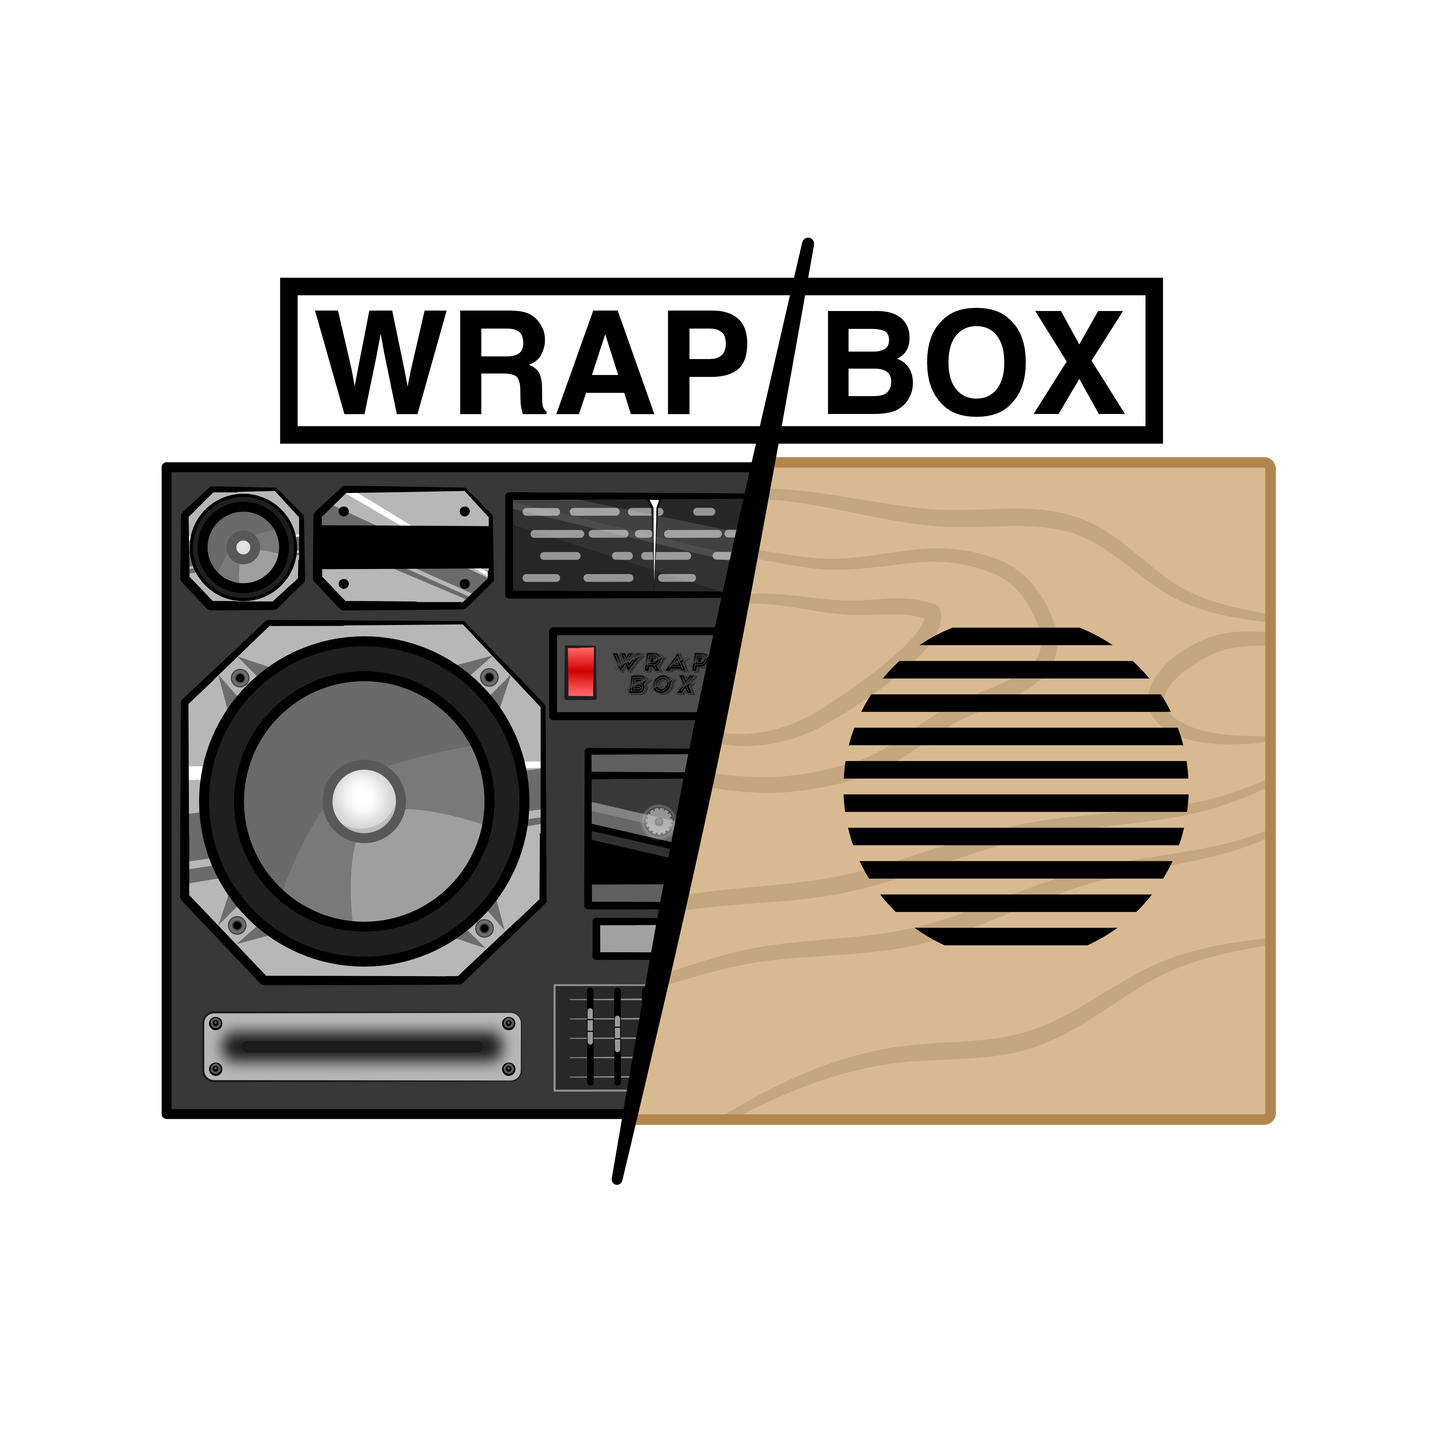 WRAPBOX - Bluetooth Apple Box Audio System